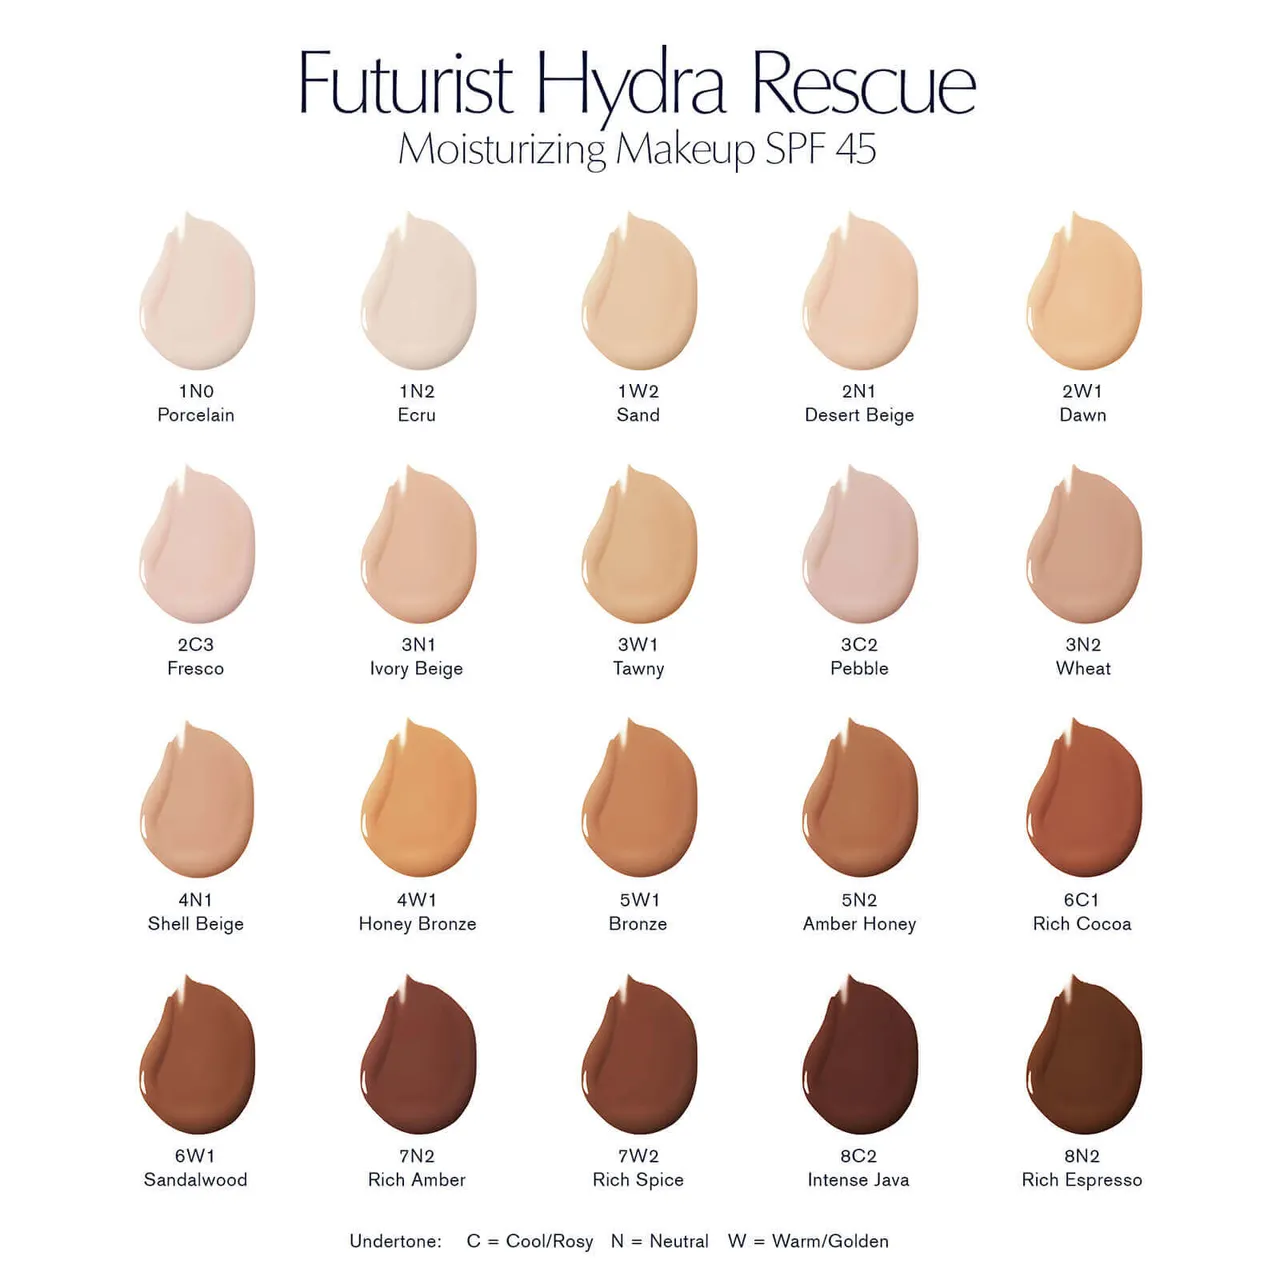 Estée Lauder Futurist Hydra Rescue Moisturizing Makeup Foundation SPF45 (Various Shades) - 4N1 Shell Beige